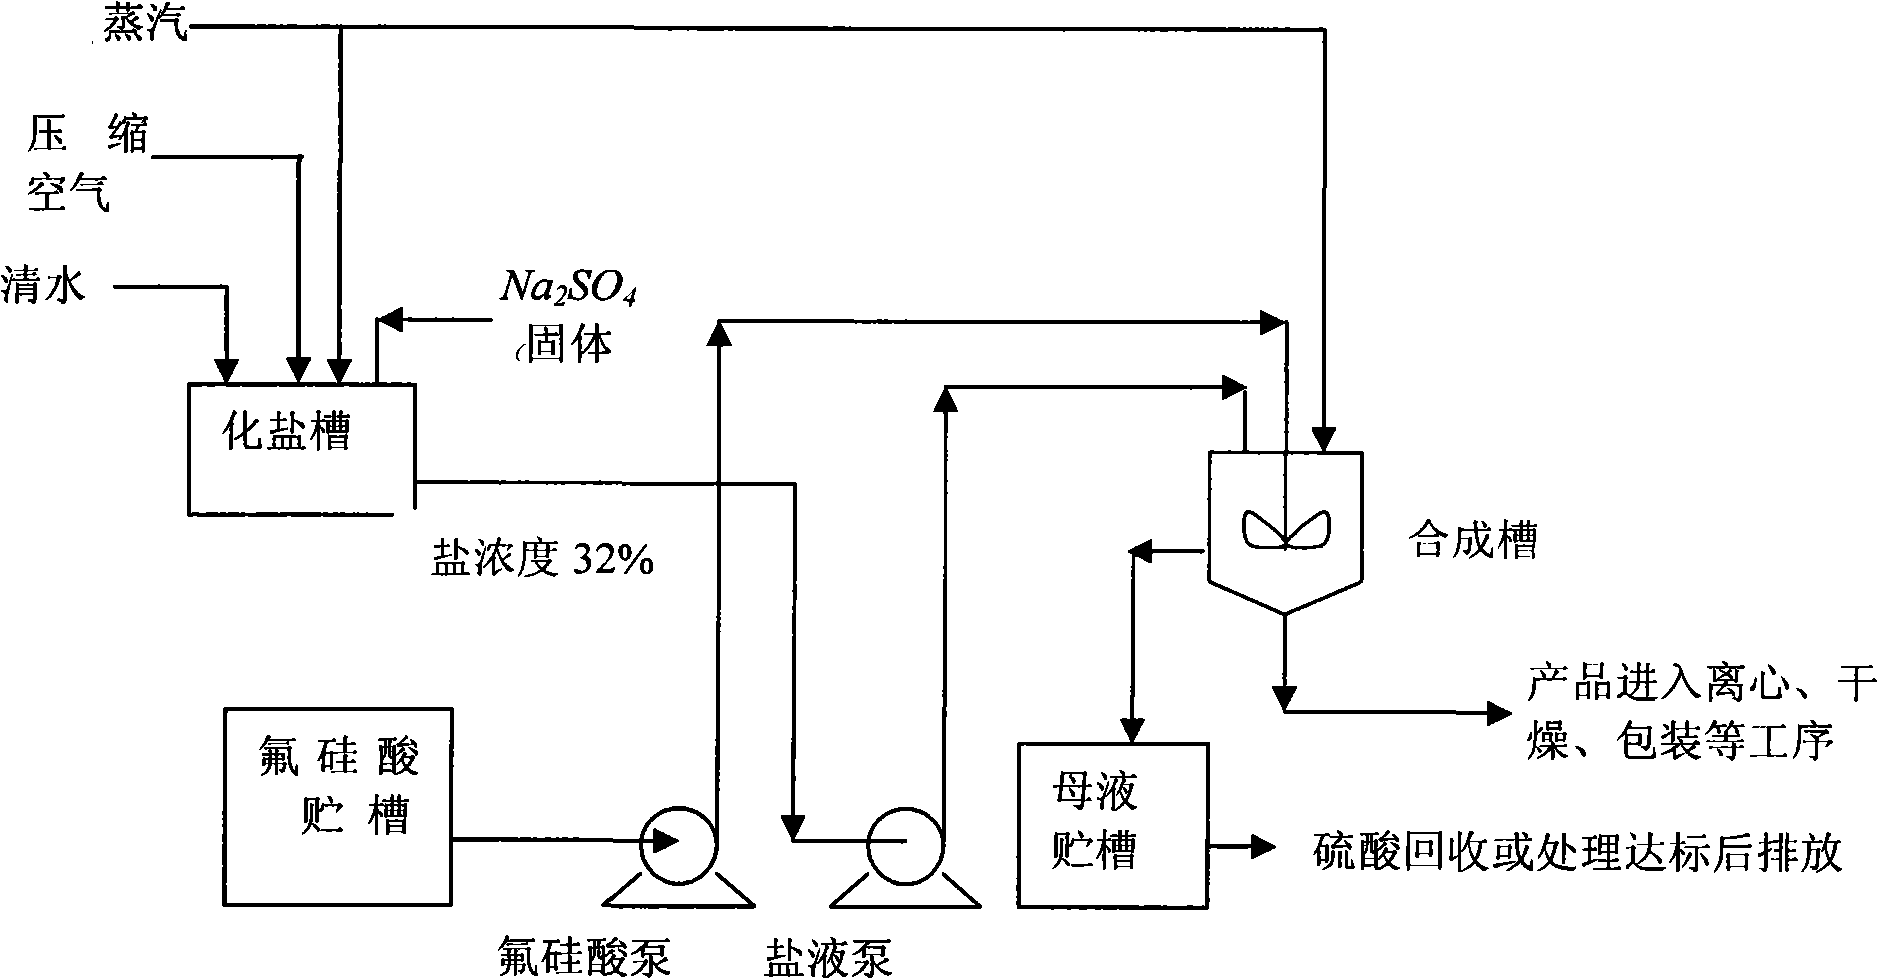 Preparation process of prodan by sodium sulfate method